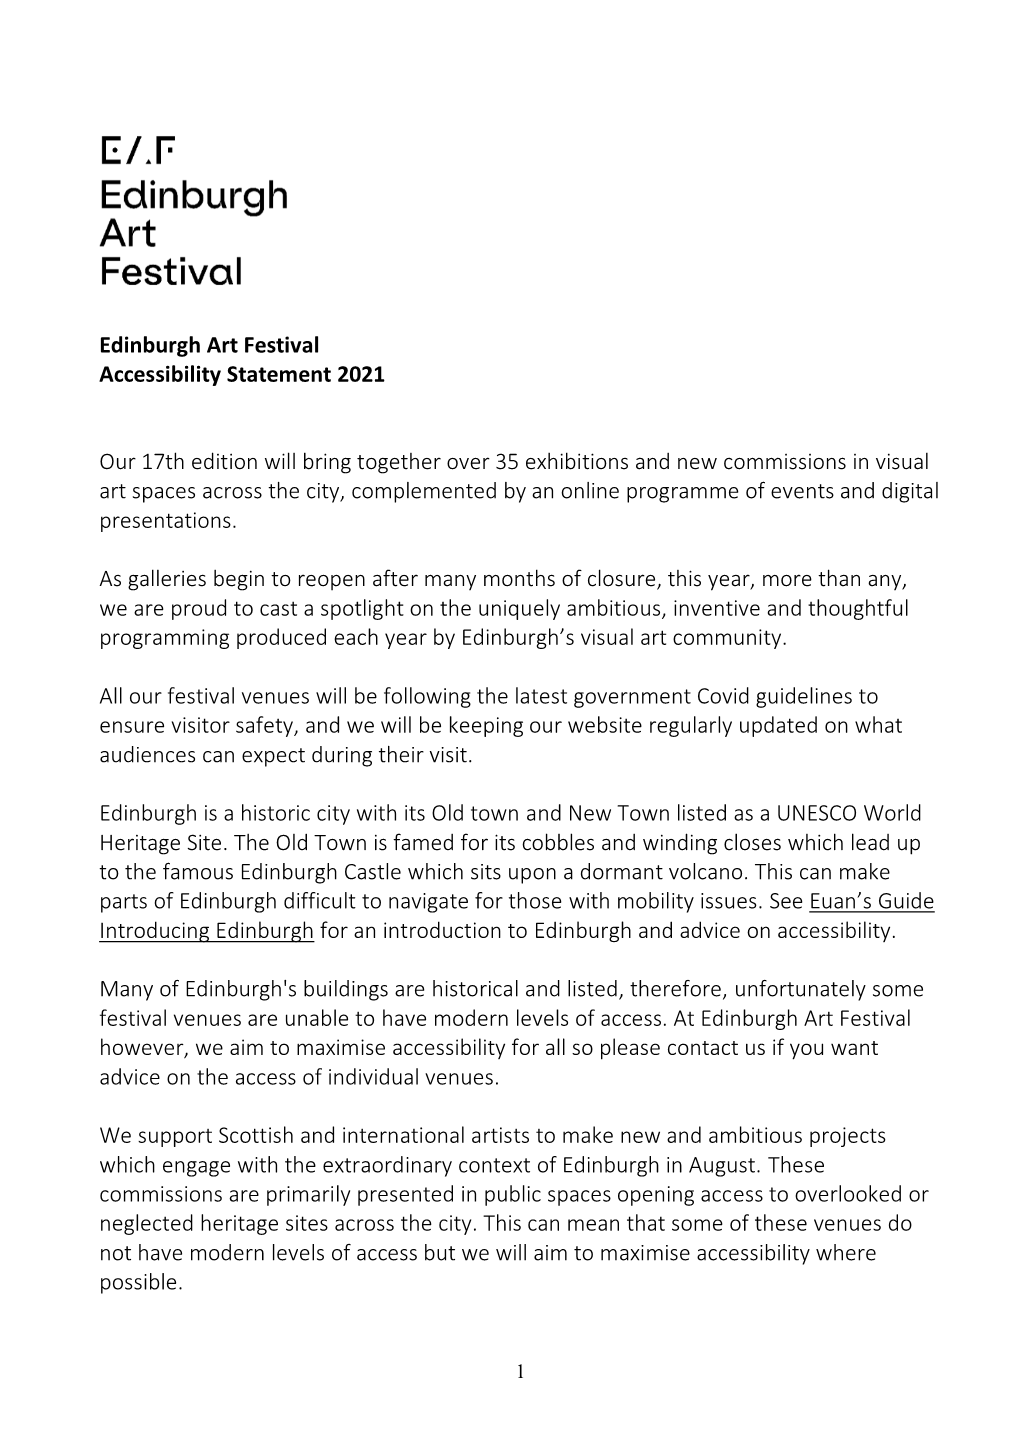 Edinburgh Art Festival Accessibility Statement 2021 Our 17Th Edition